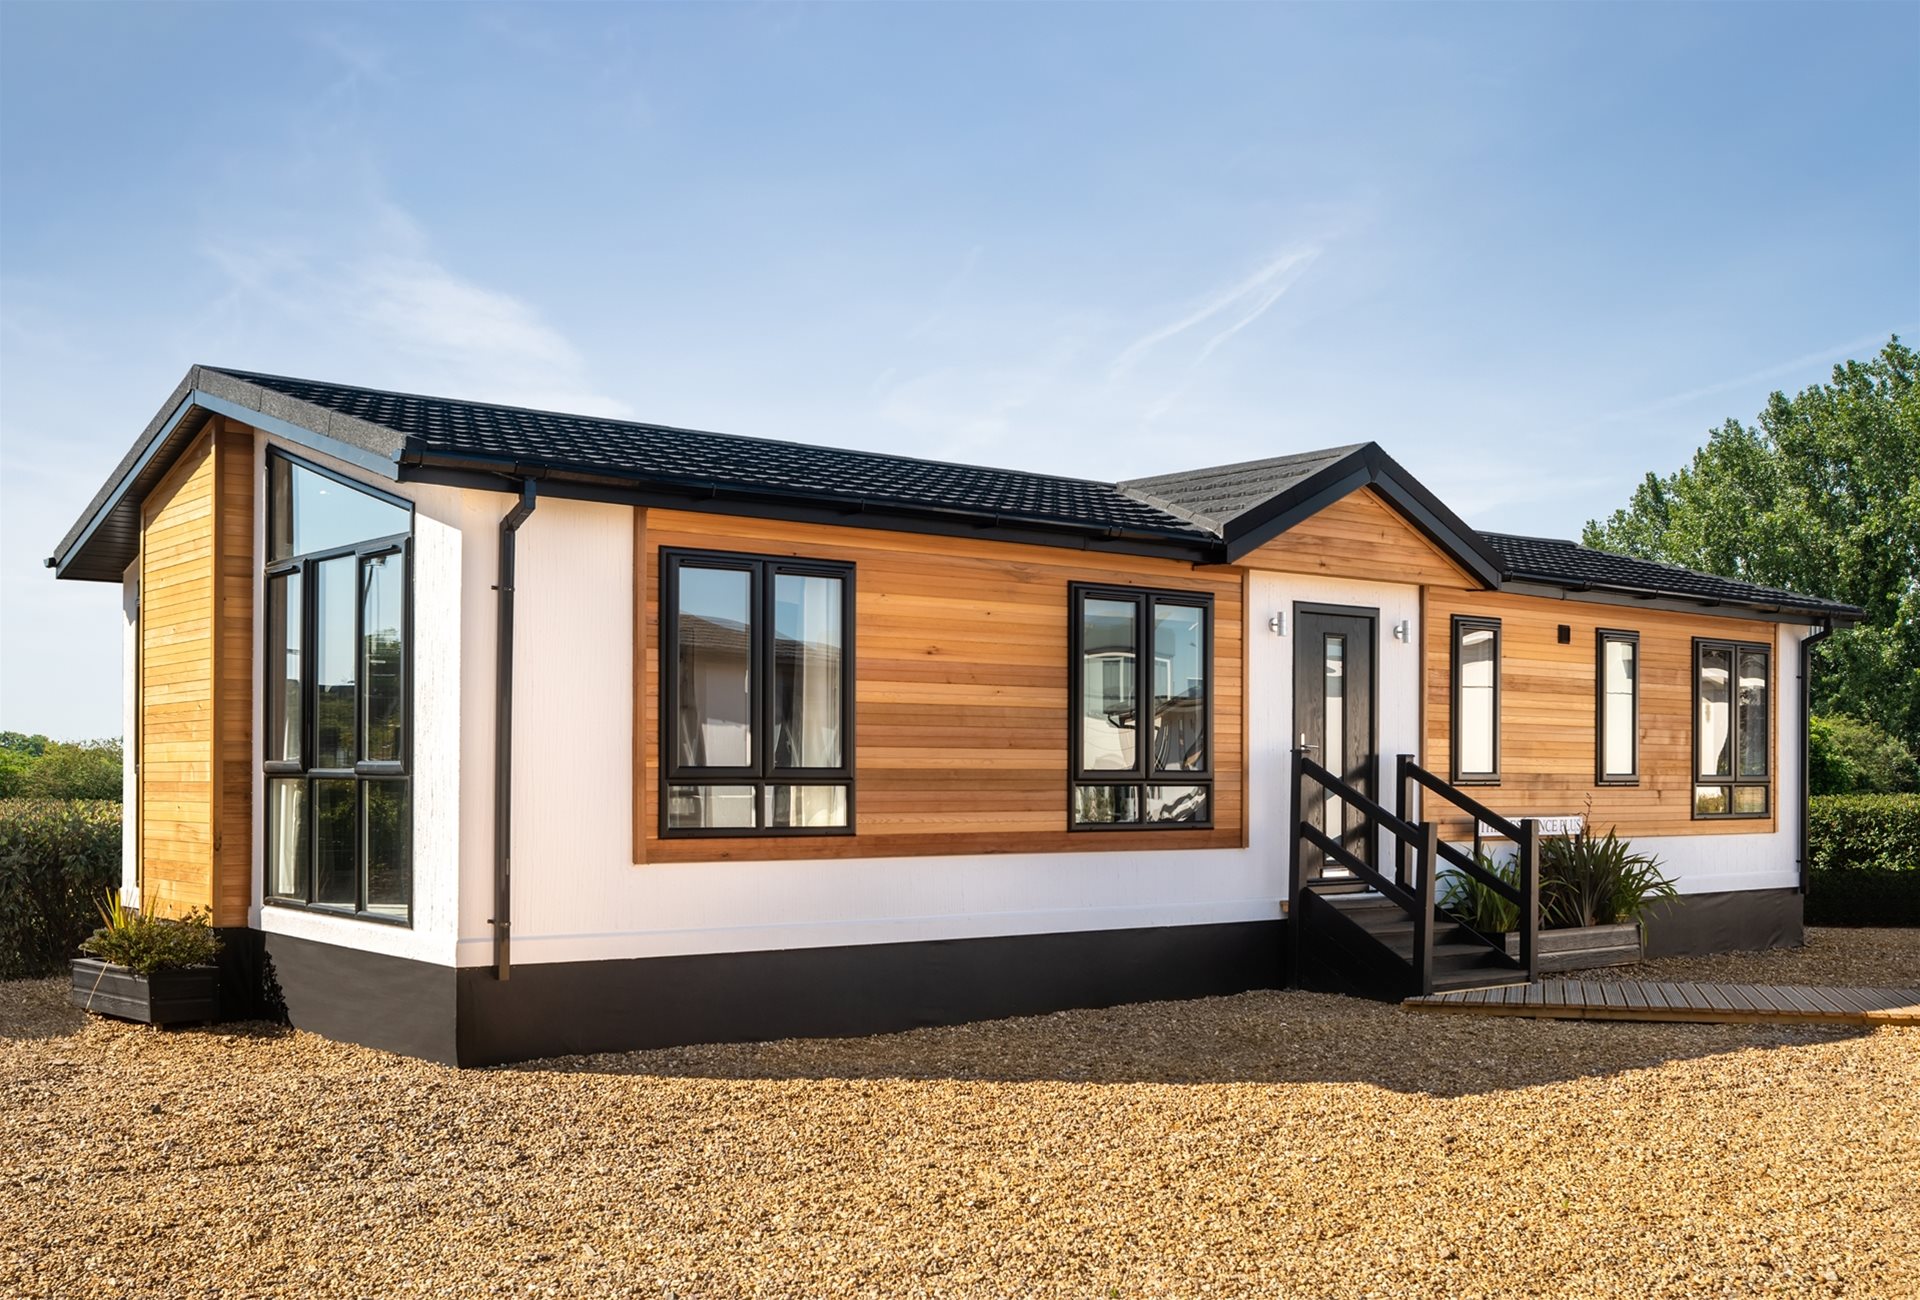 New Landscape Living Kensington luxury lodge bespoke static caravan mobile home annexe annex